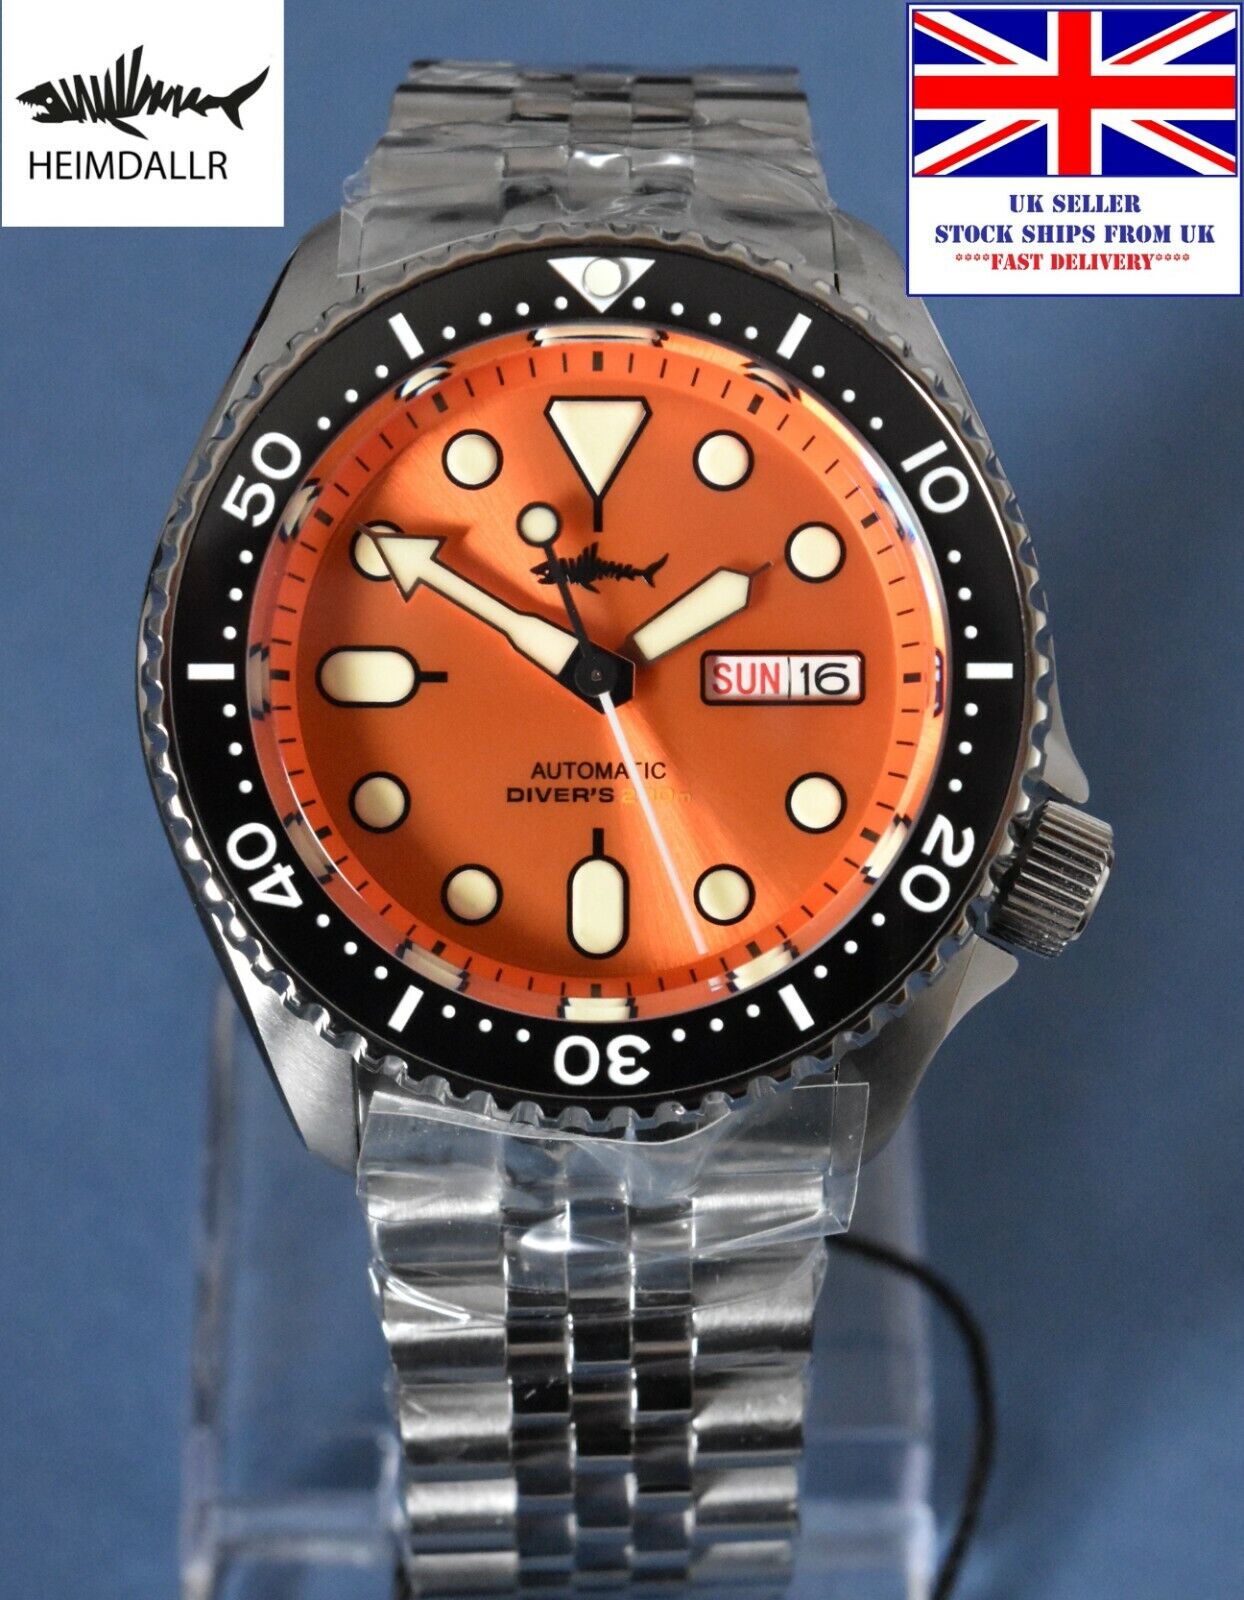 HEIMDALLR Sharkey ORANGE SKX Dive Watch, Sunburst Dial, 200m, Seiko NH36 Auto